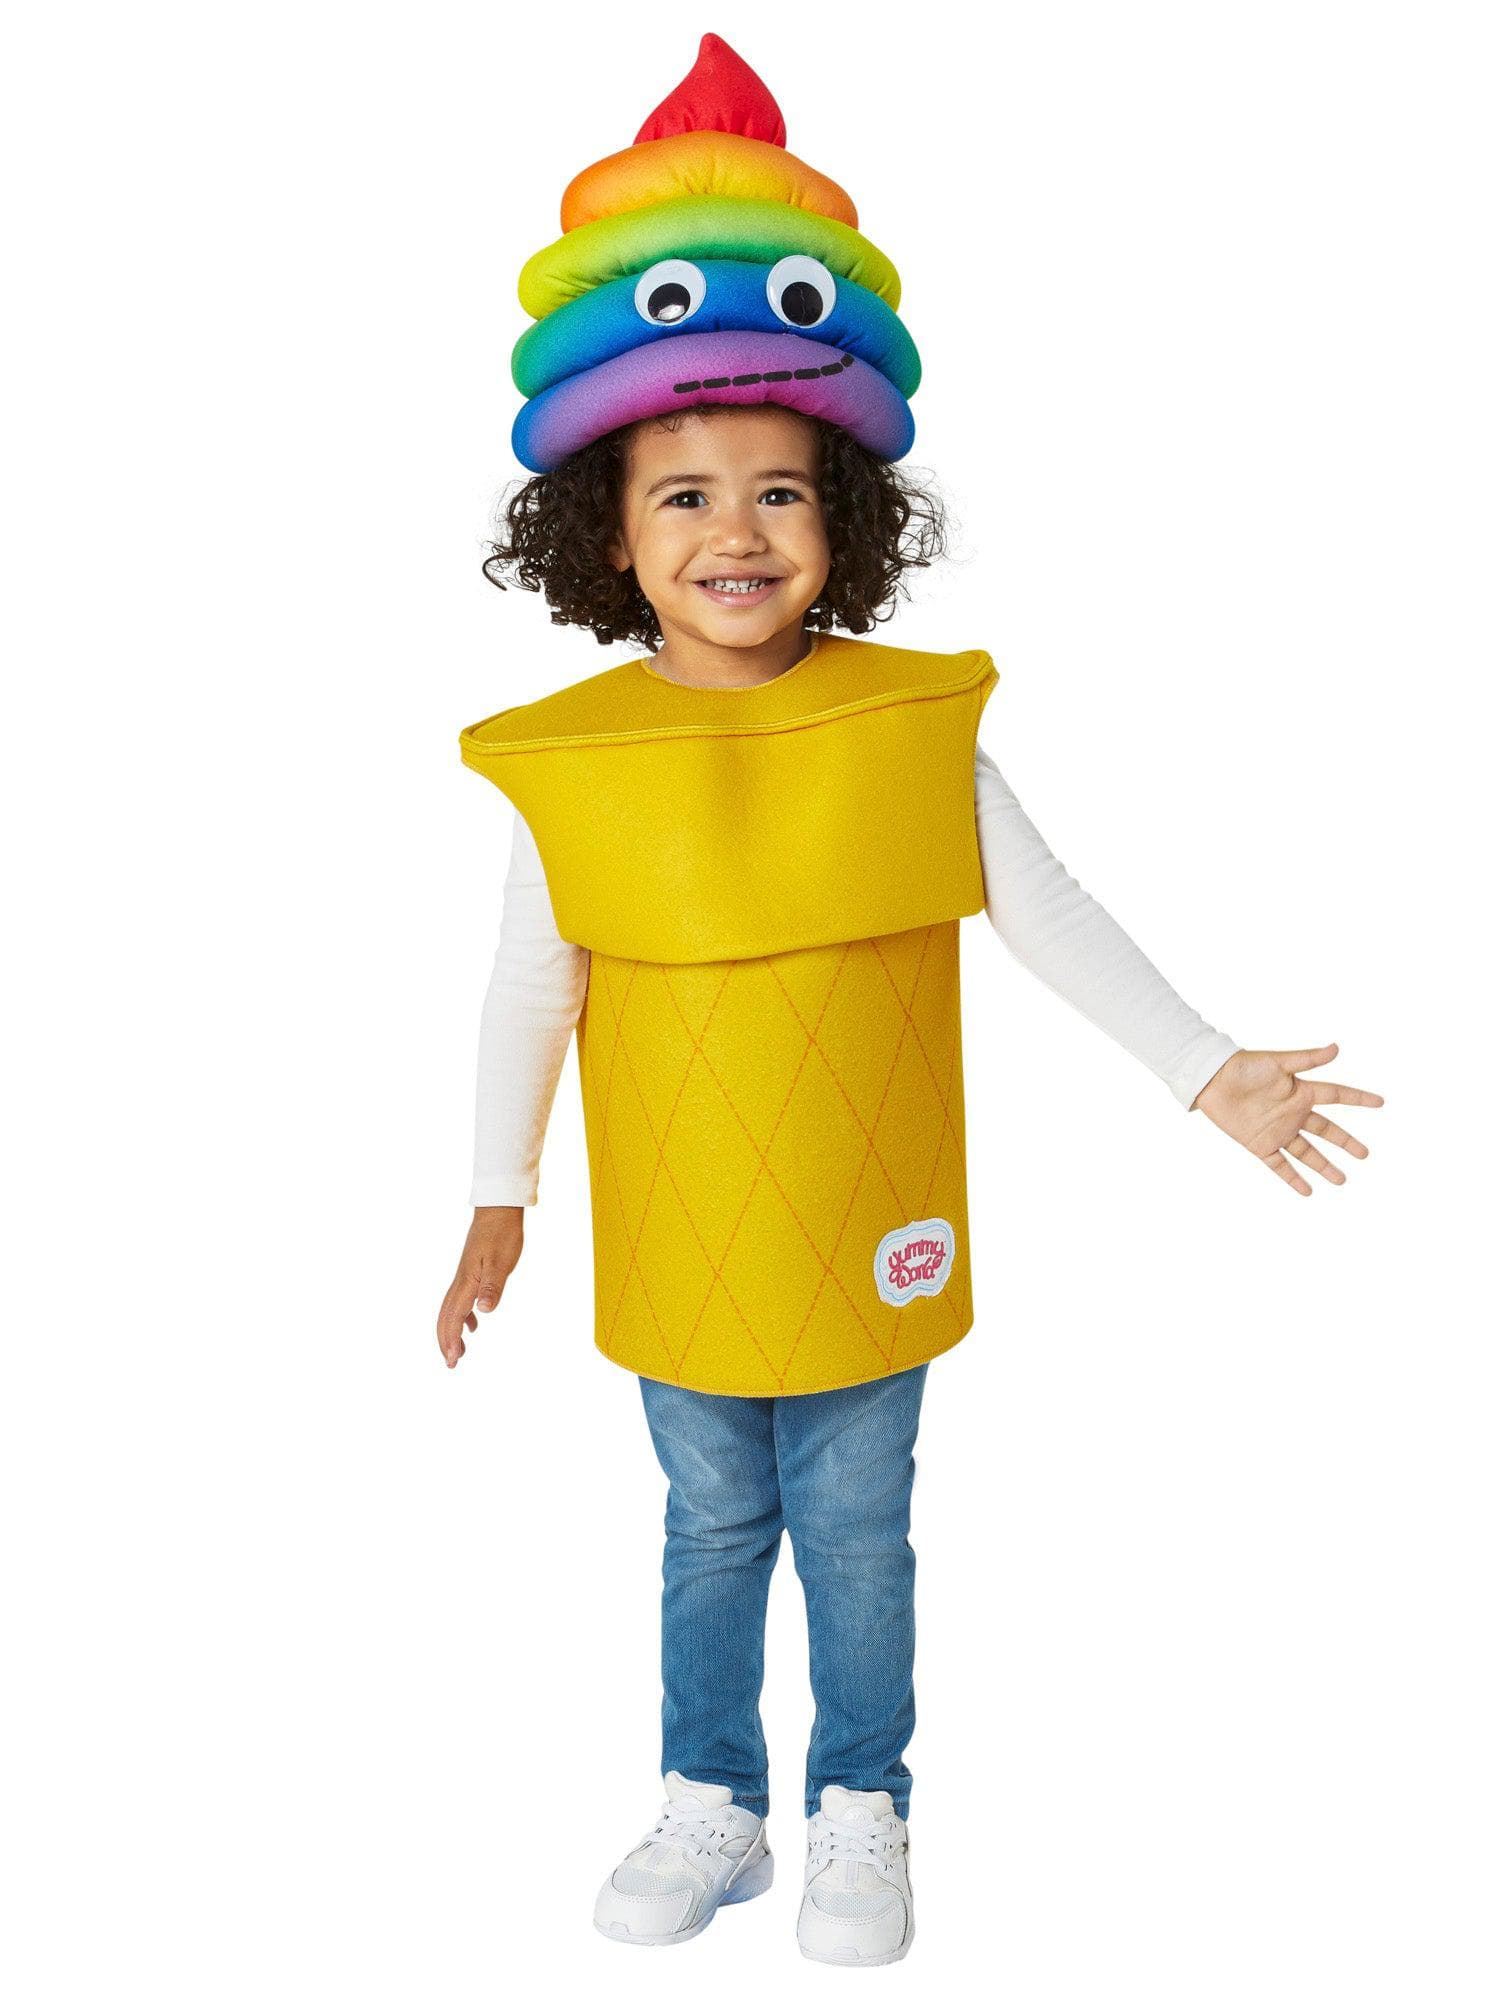 Yummy World Rainbow Soft Serve Kids Costume by Kidrobot - costumes.com